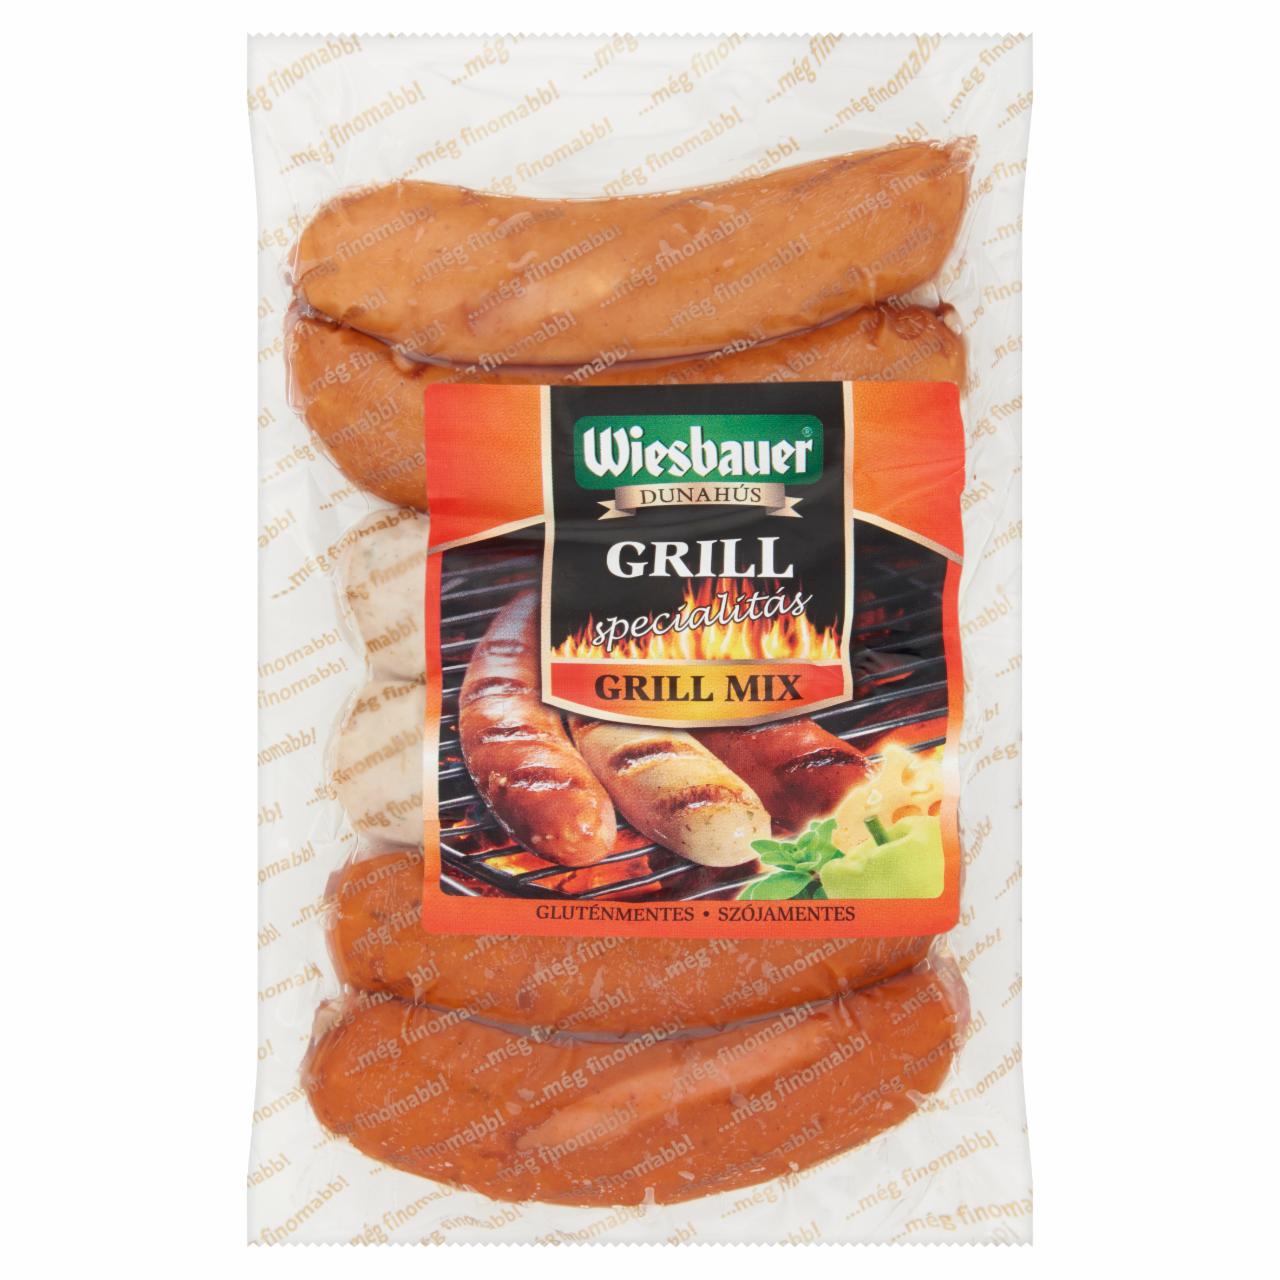 Képek - Wiesbauer Grillmix grill specialitás 360 g